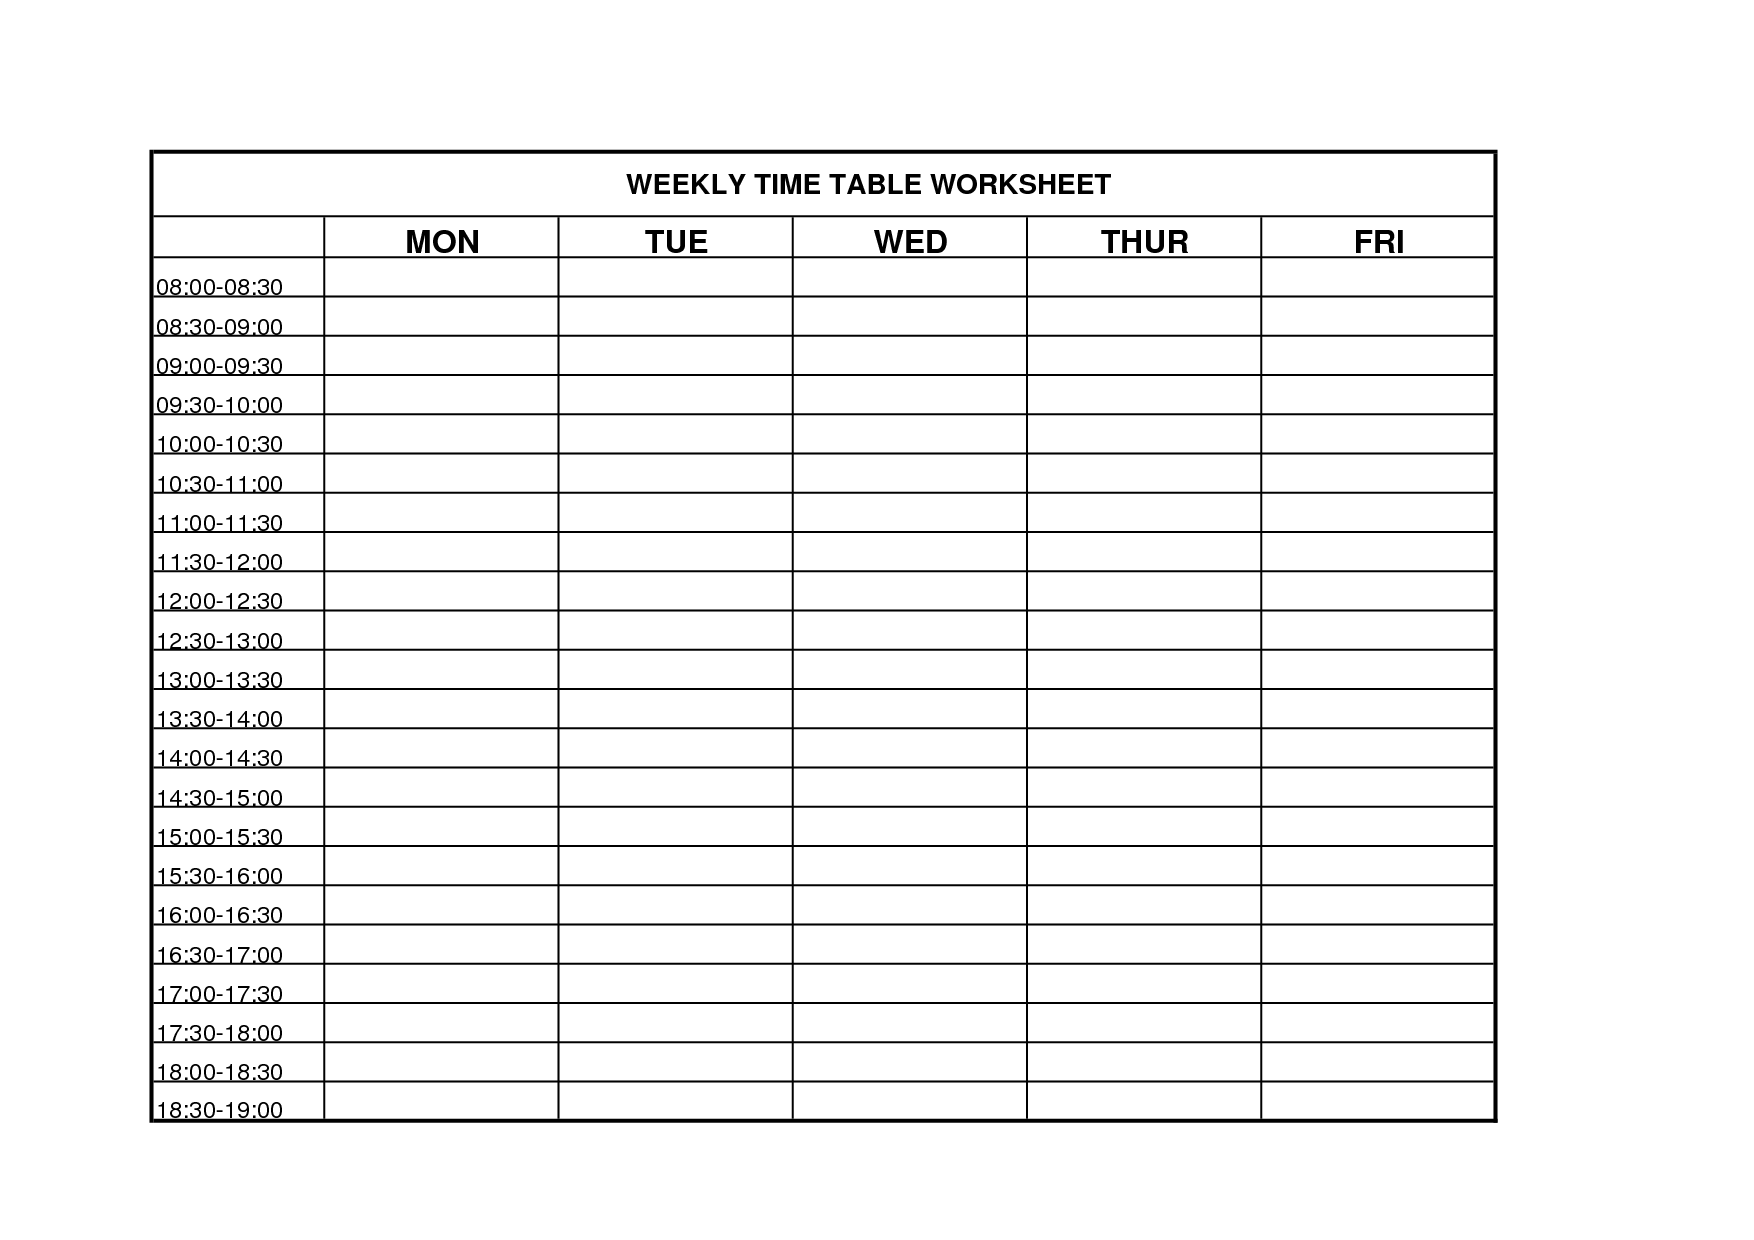 Weekly Time Management Worksheet Image